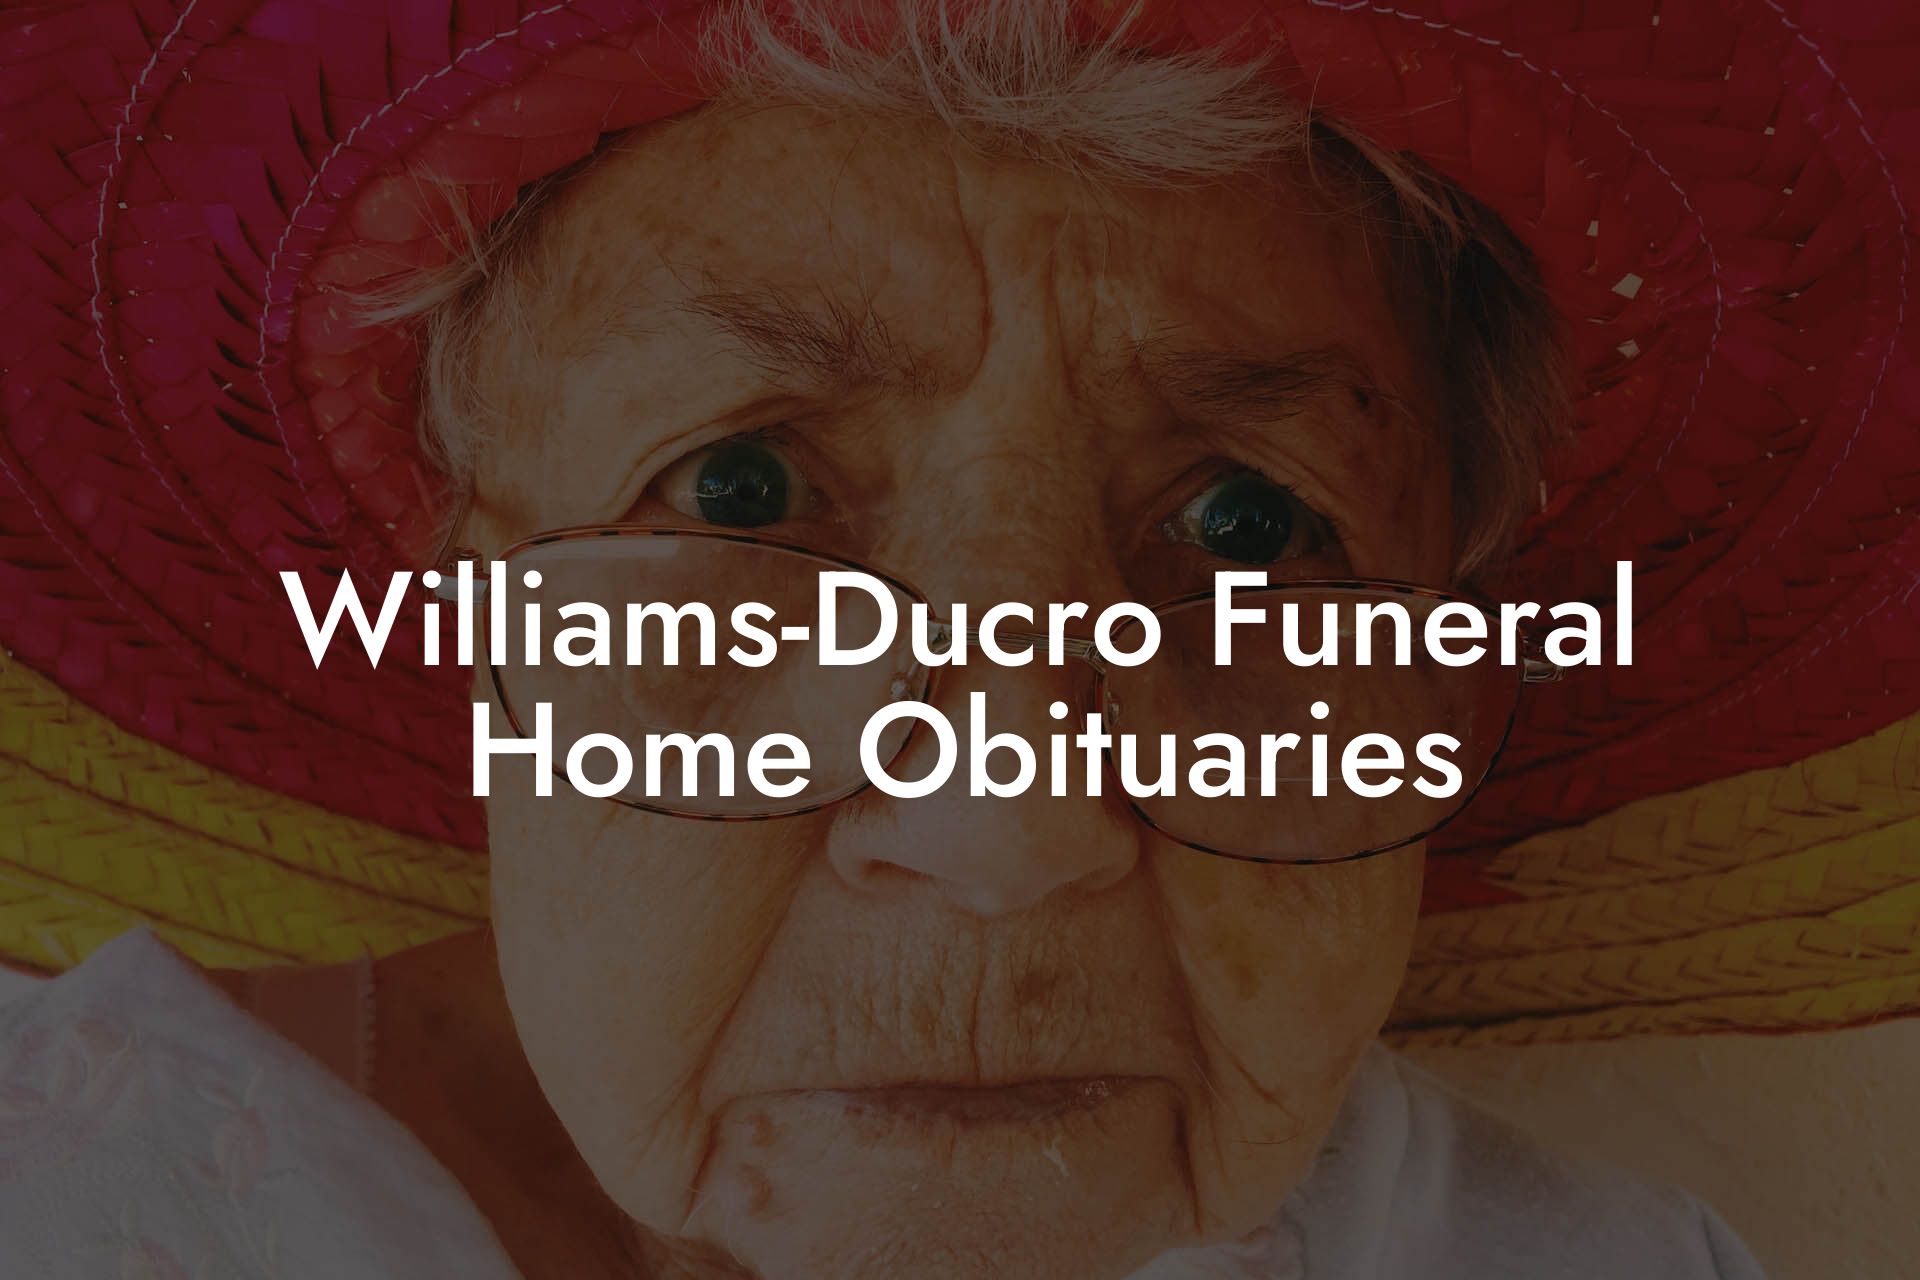 Williams-Ducro Funeral Home Obituaries